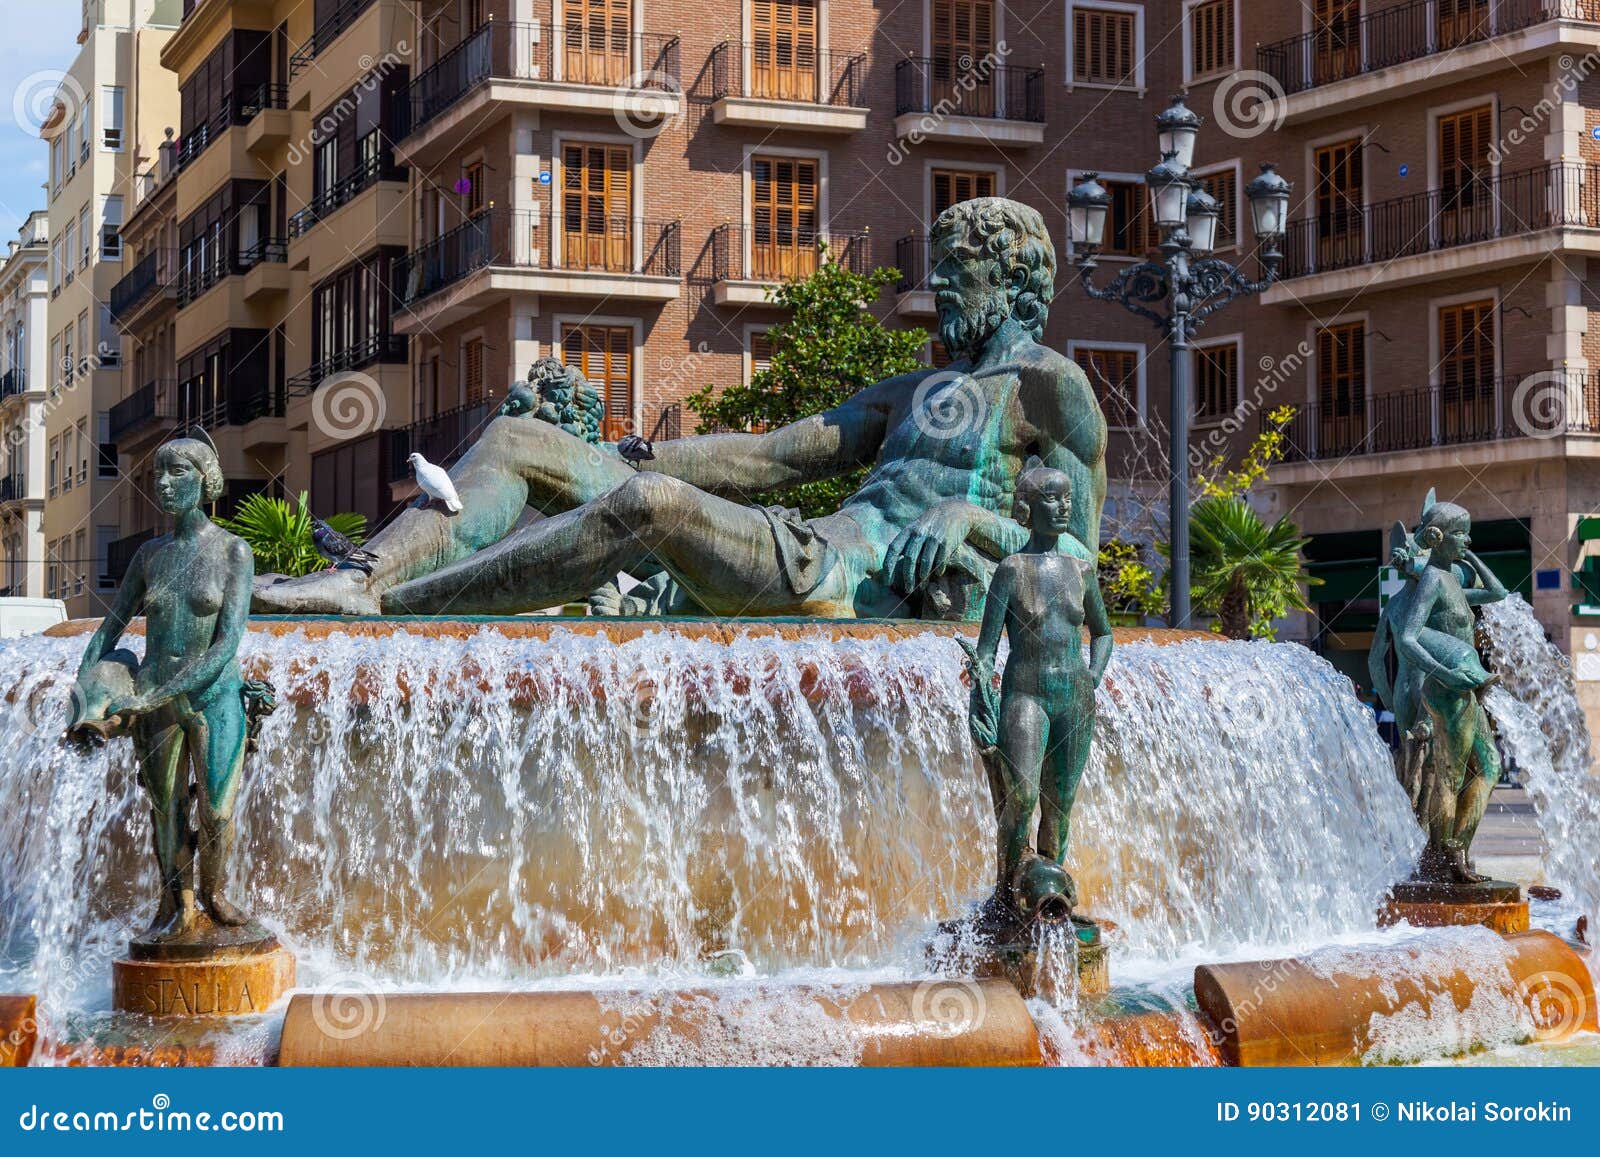 turia fountain in valencia spain